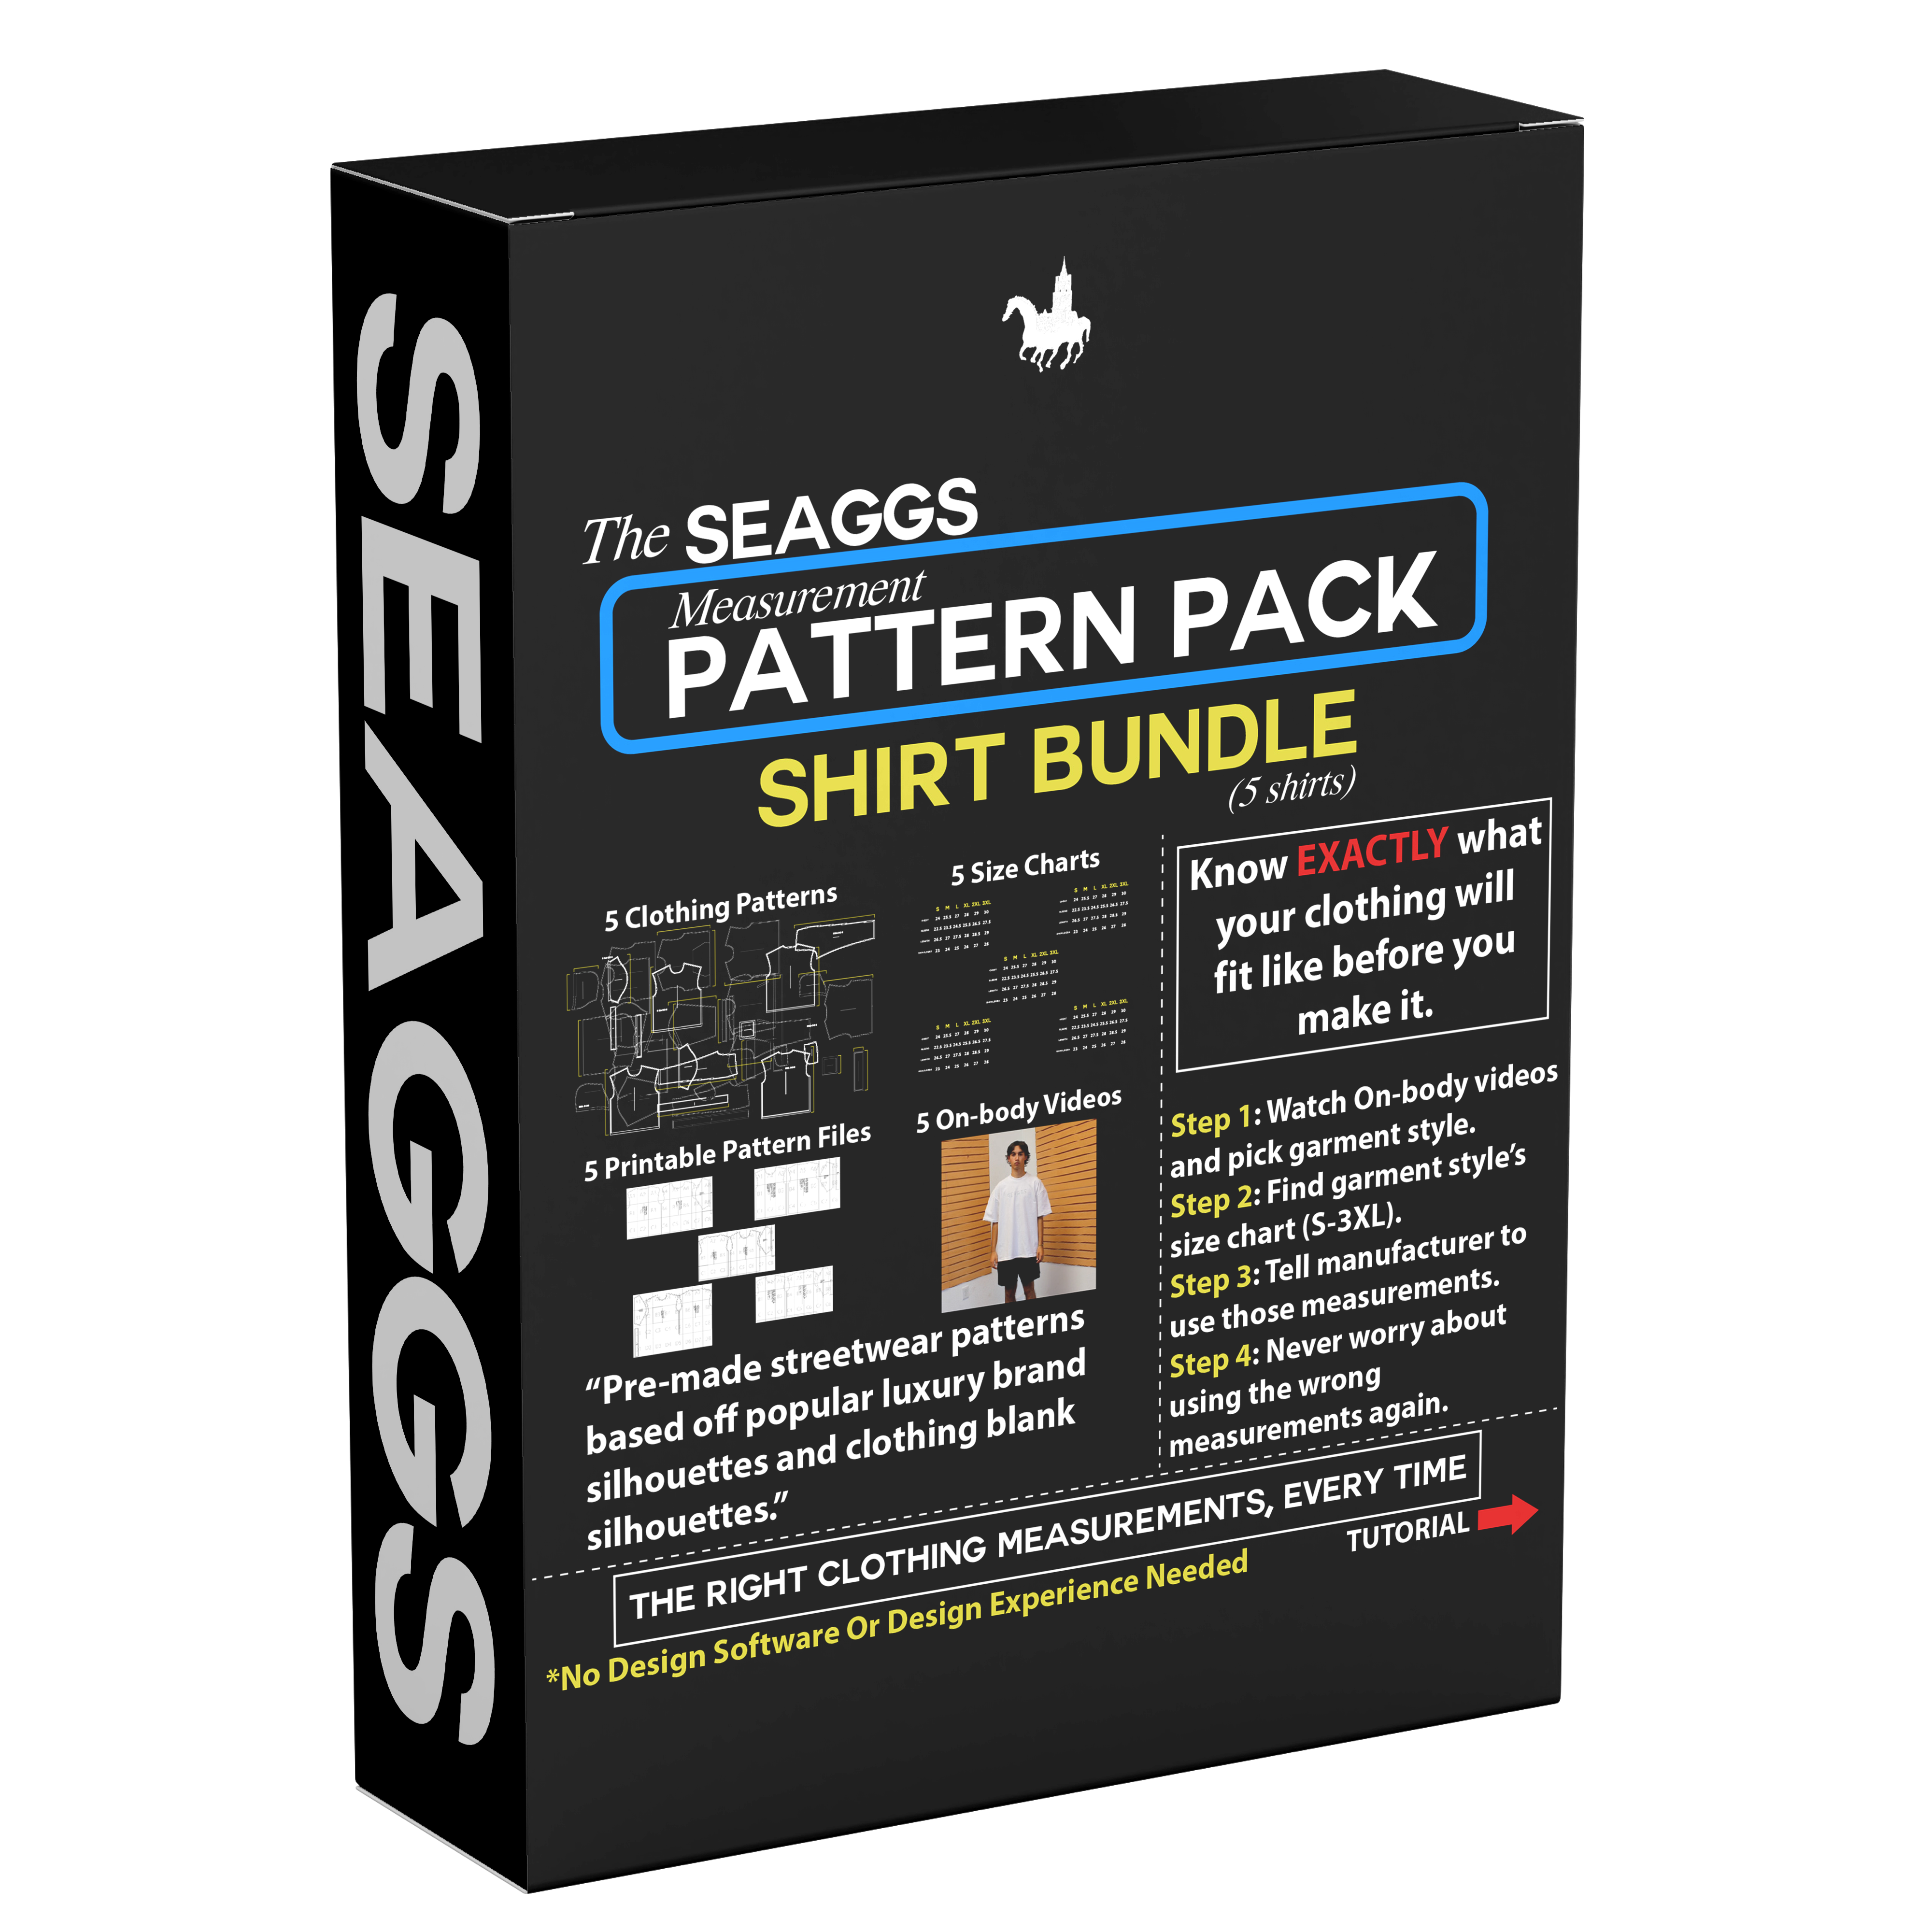 Seaggs Pattern Pack SHIRT BUNDLE